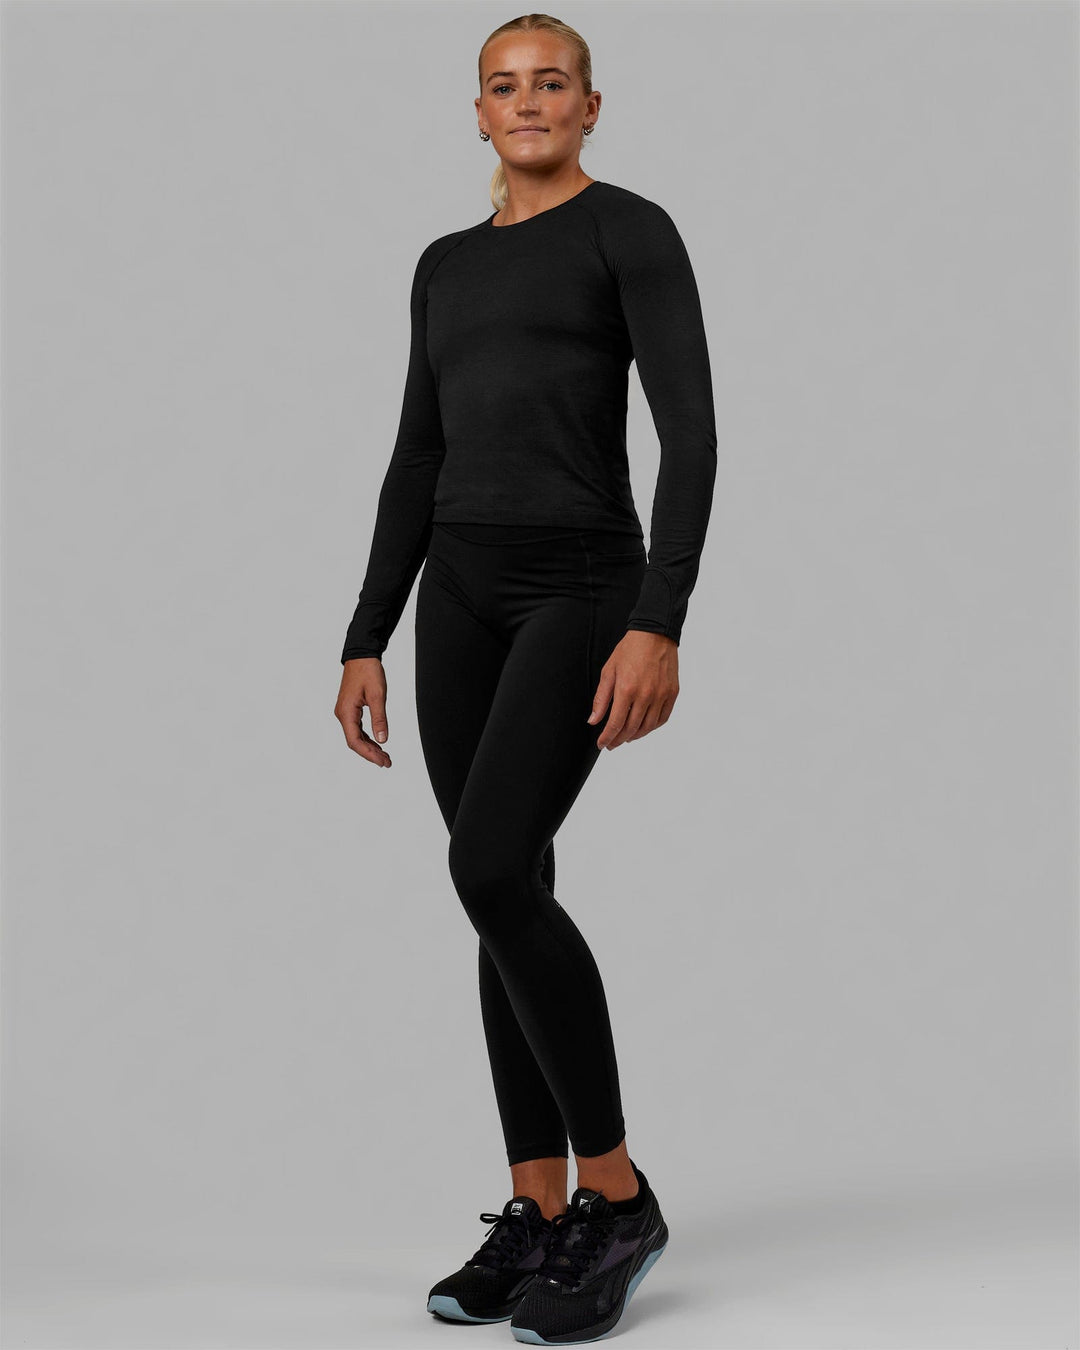 Woman wearing AeroFLX+ Seamless Long Sleeve Tee - Black Marl